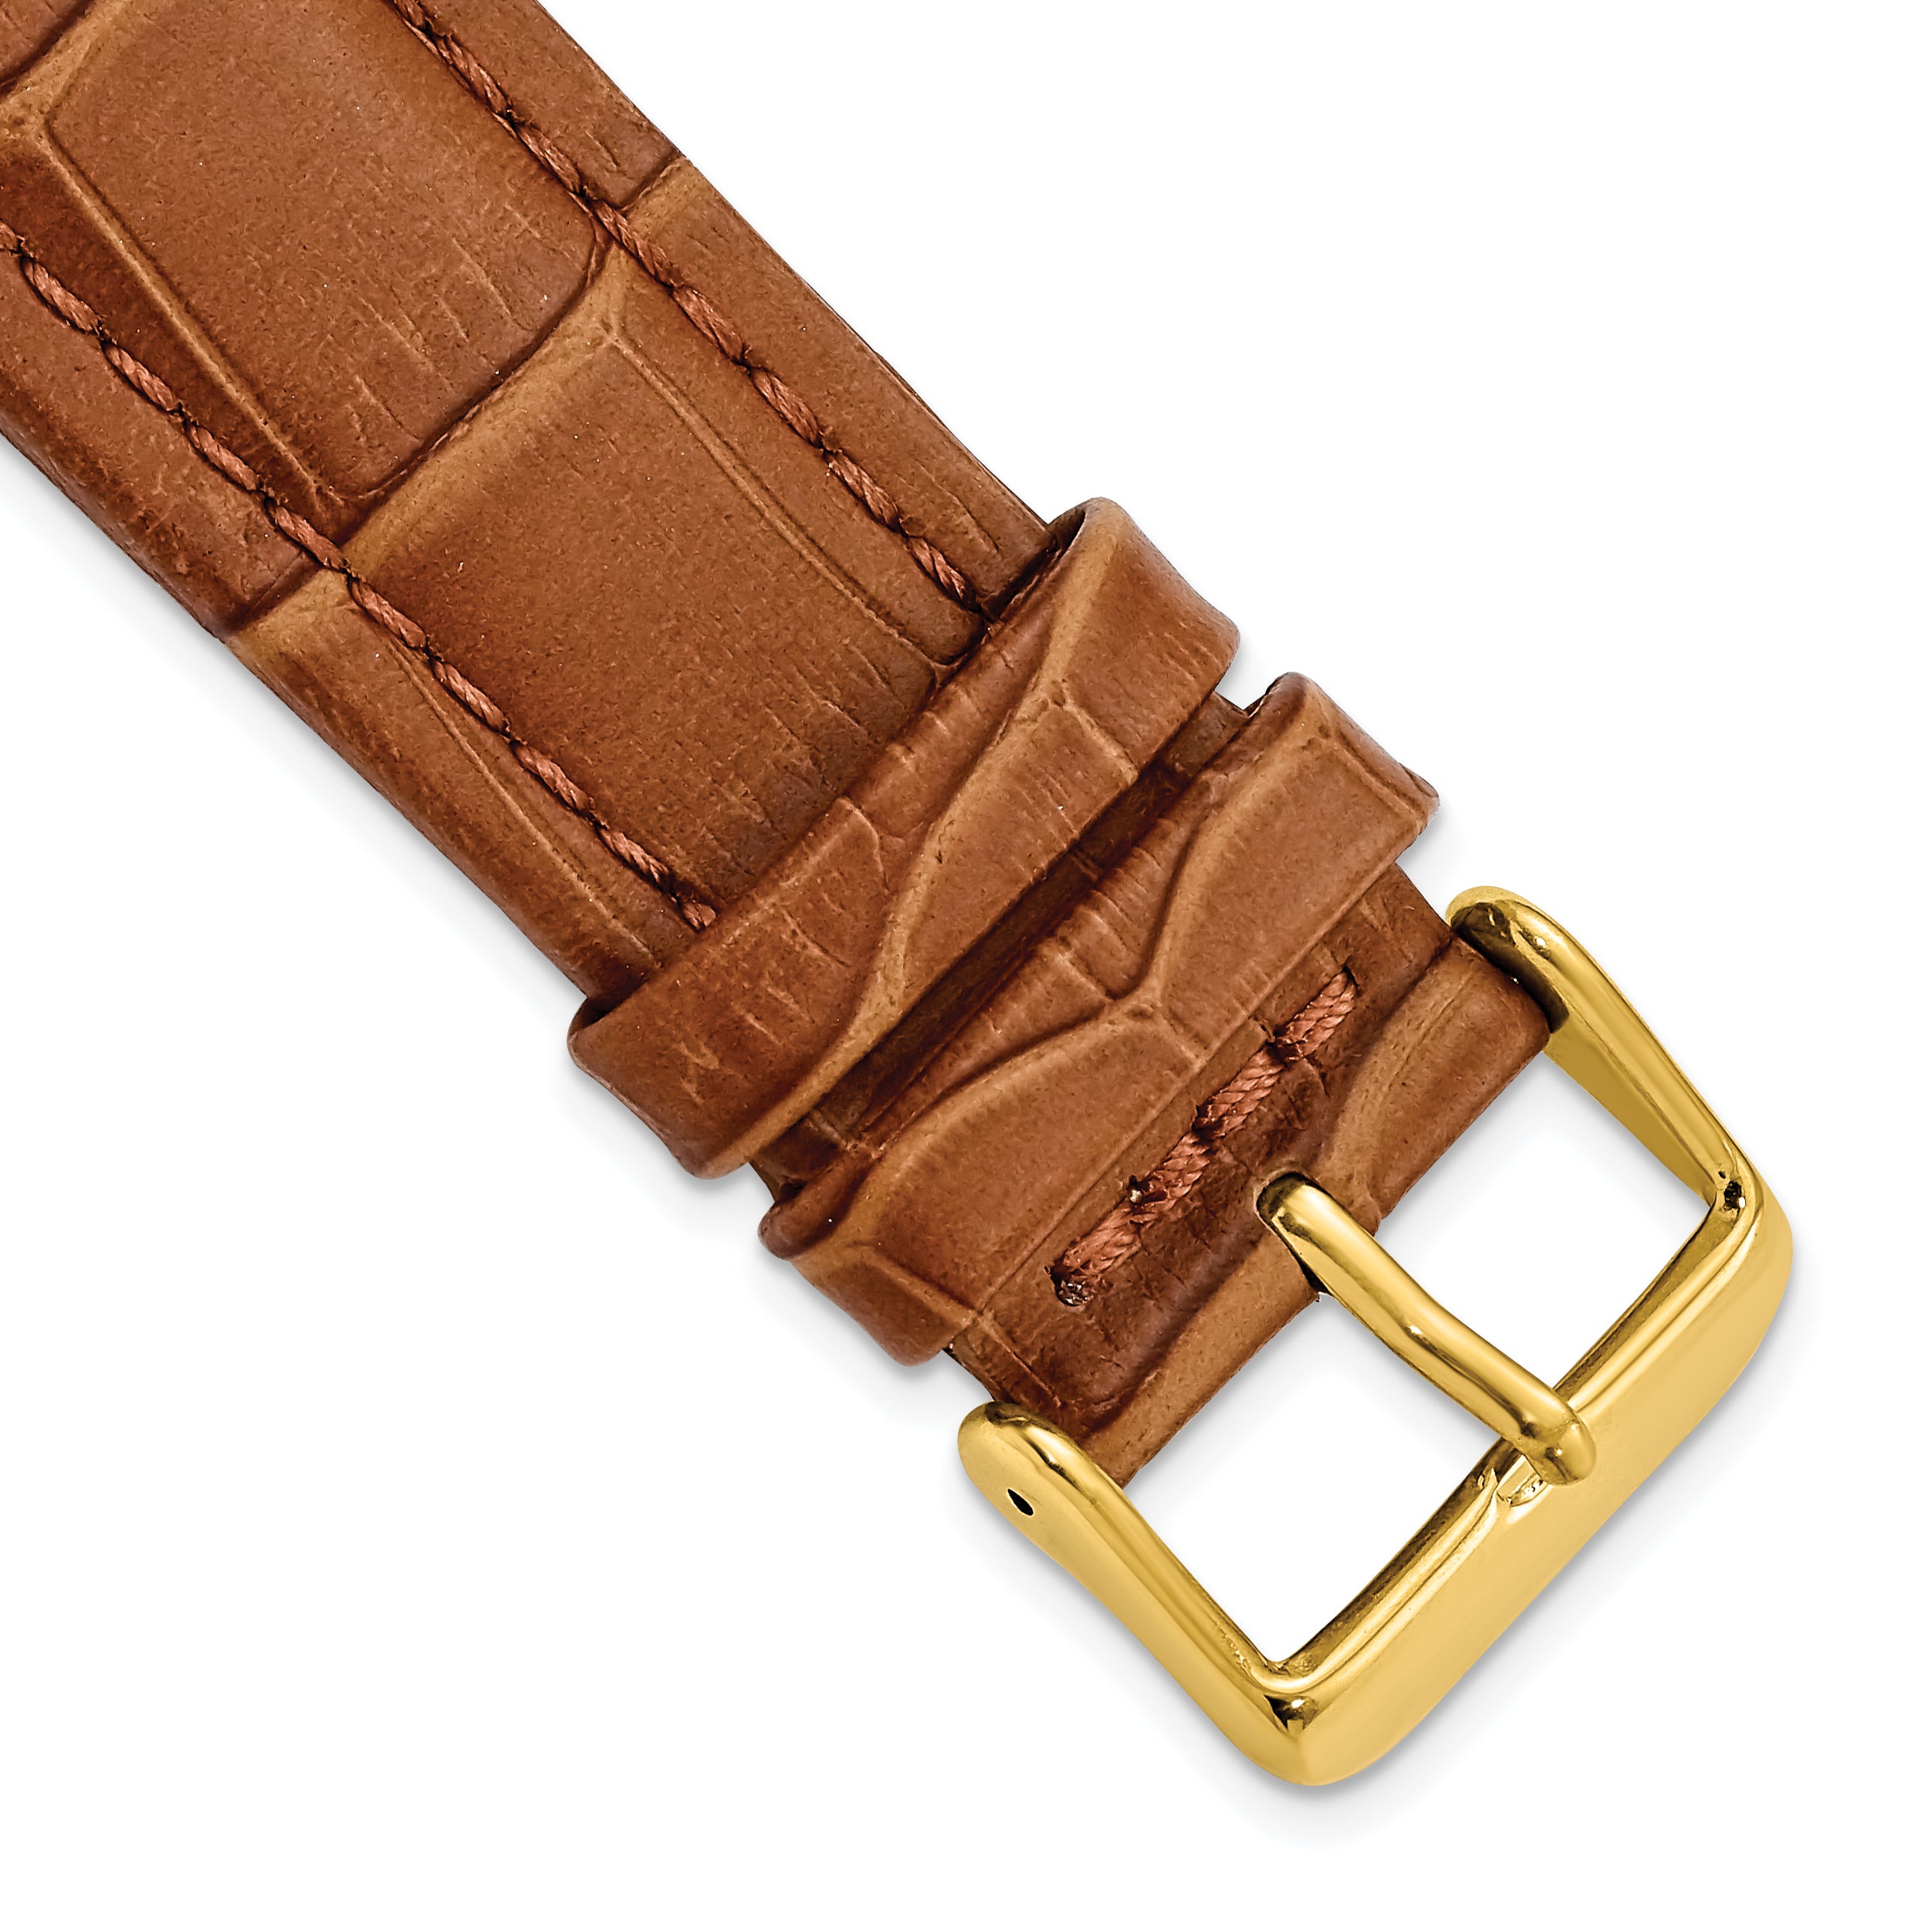 DeBeer 22mm Havana Matte Alligator Grain Leather with Gold-tone Buckle 7.5 inch Watch Band